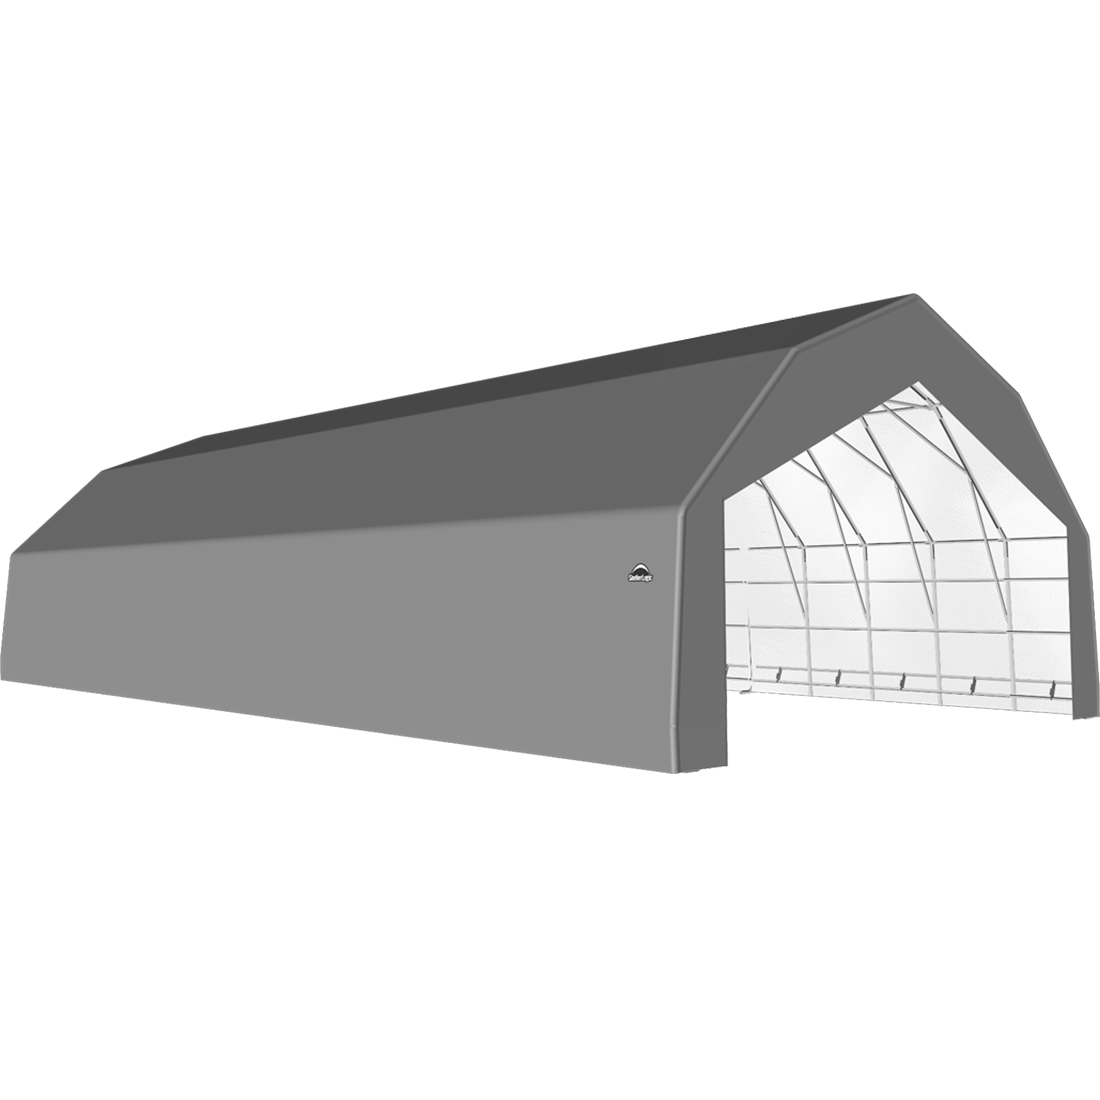 ShelterTech SP Series Barn Shelter, 30 ft. x 64 ft. x 18 ft. Heavy Duty PVC 14.5 oz. Gray